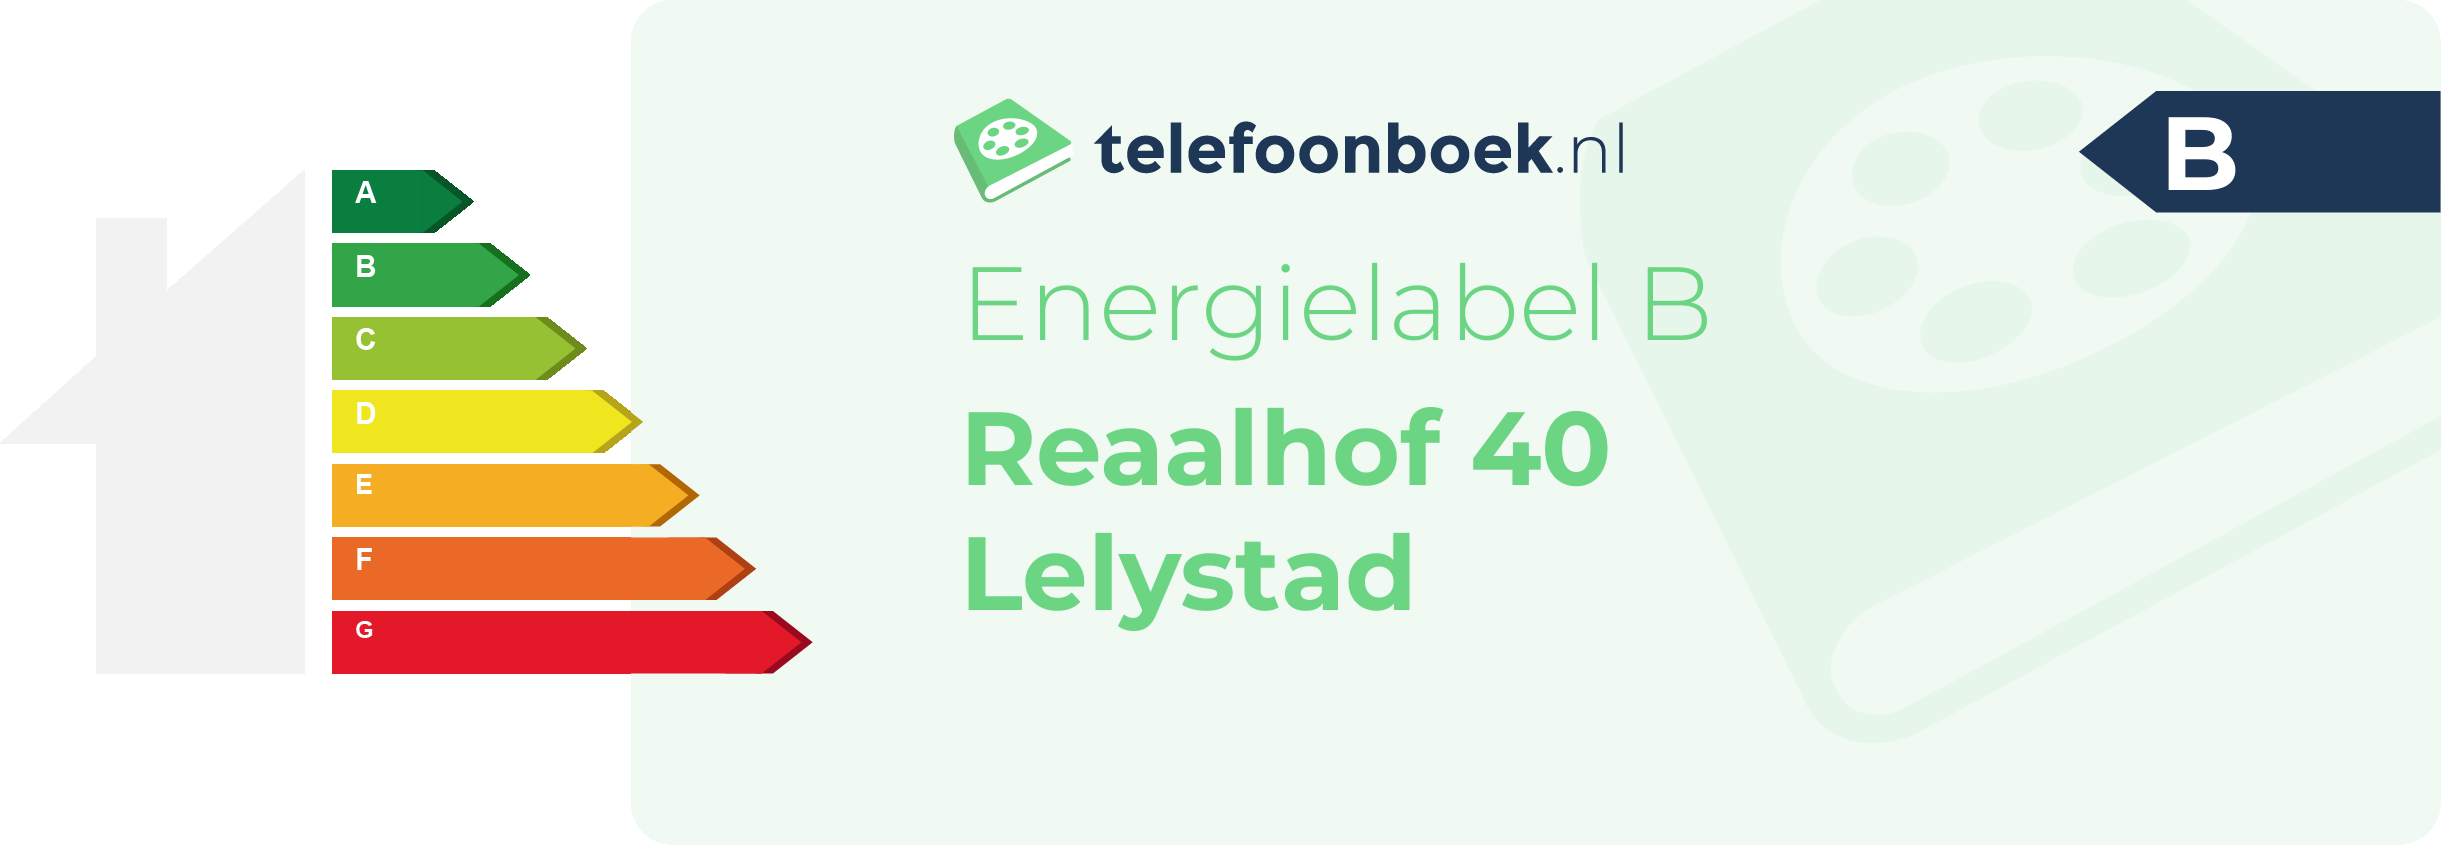 Energielabel Reaalhof 40 Lelystad